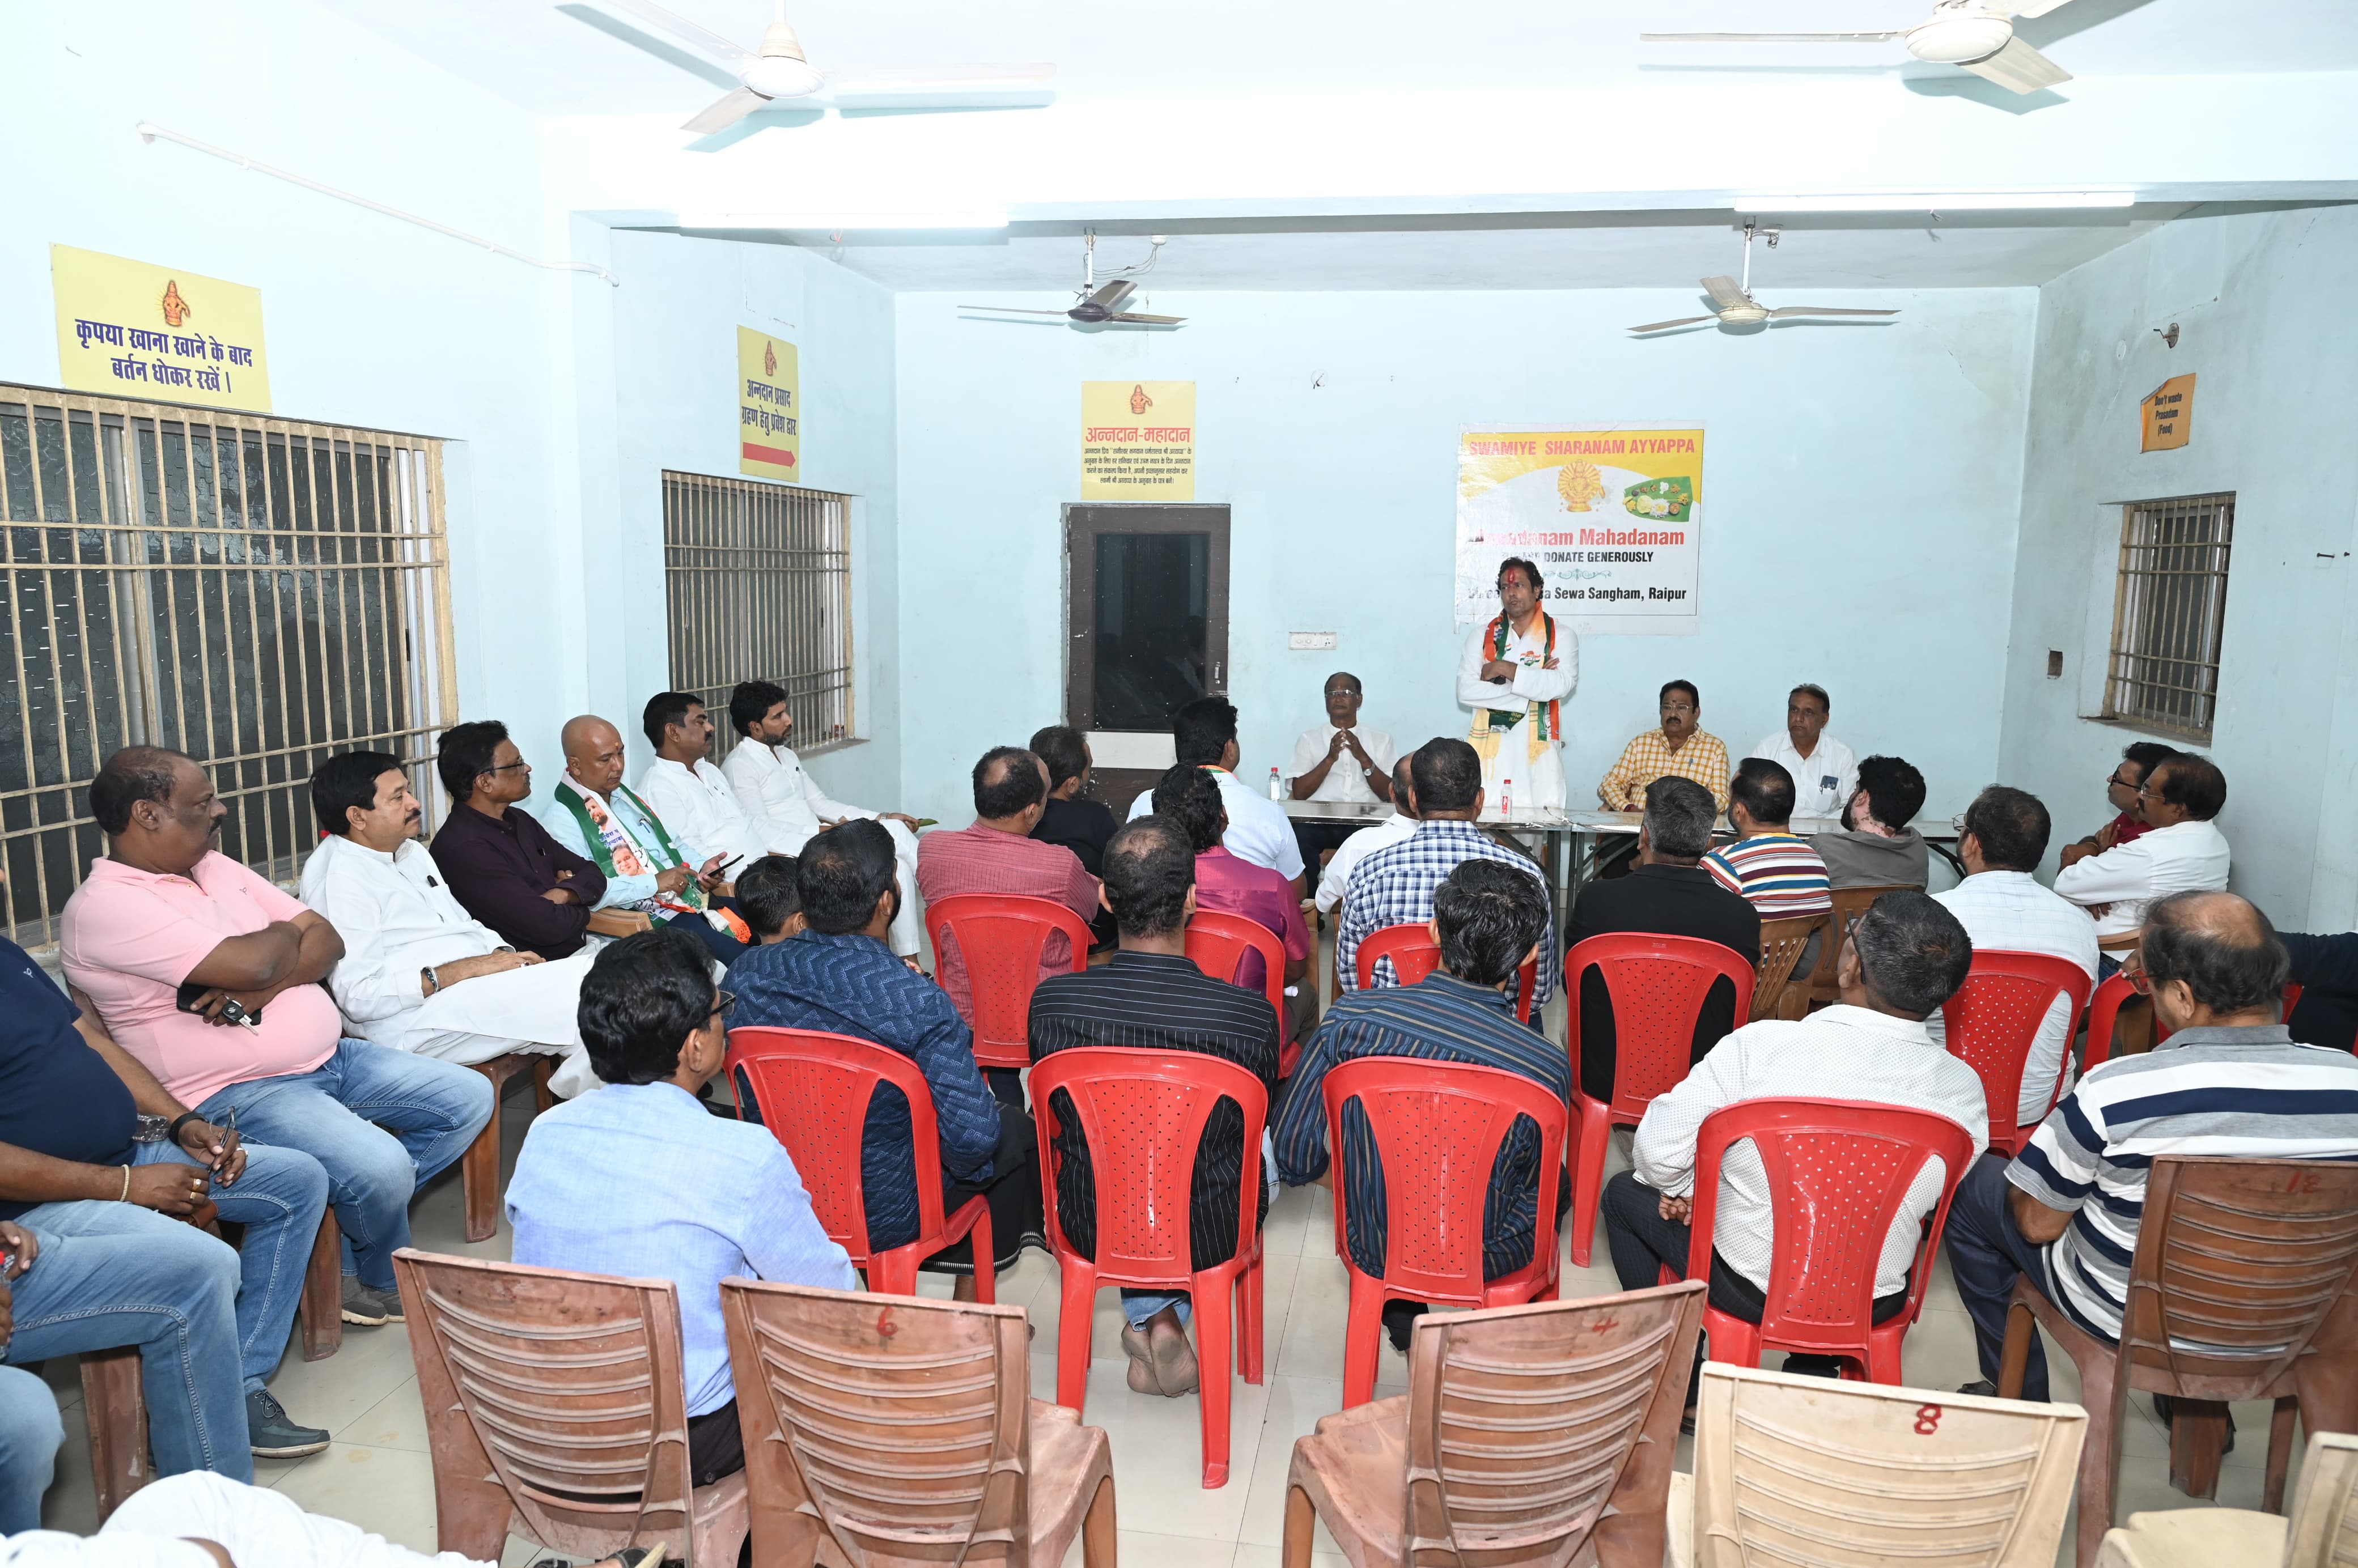 Janvandan Yatra, Vikas Upadhyay, disabled person presented Shagun Rashi, Raipur West MLA Vikas Upadhyay, Assembly elections, Khabargali